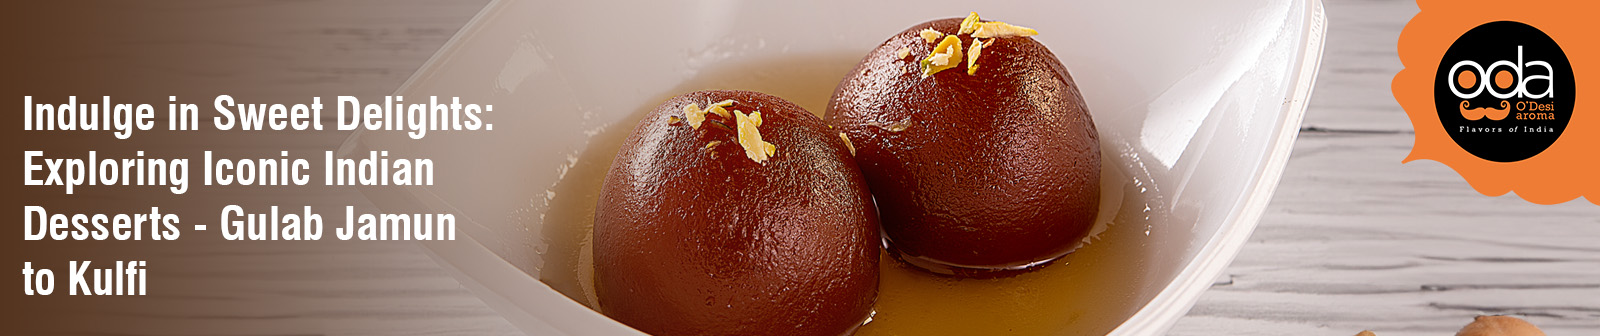 Indulge in Sweet Delights Exploring Iconic Indian Desserts Gulab Jamun to Kulfi Heading (1)